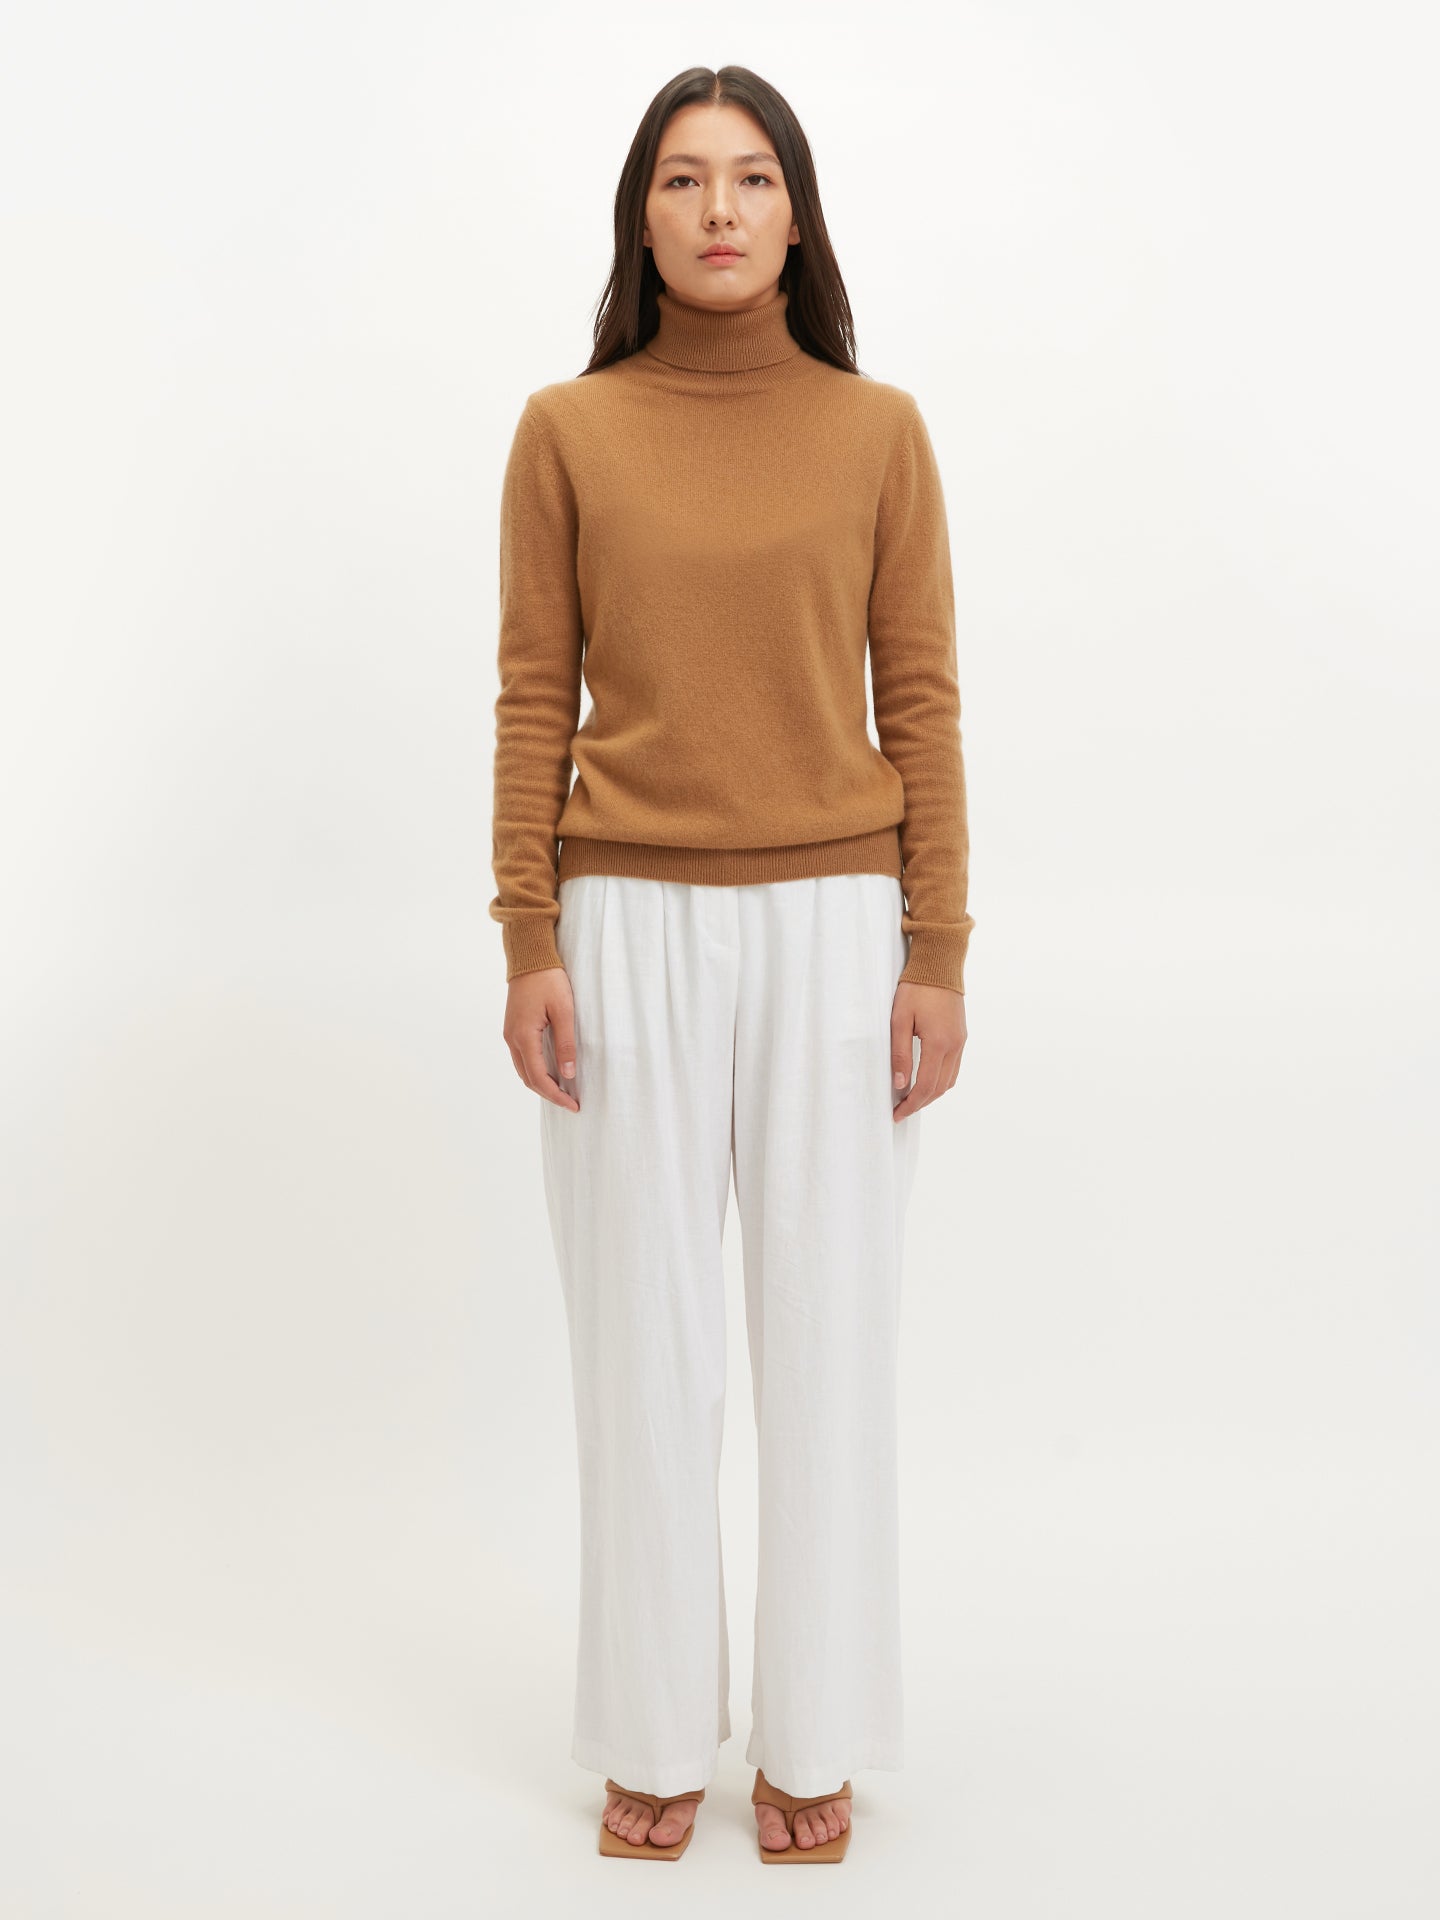 Women's Cashmere Basic Turtle Neck Sweater Almond - Gobi Cashmere